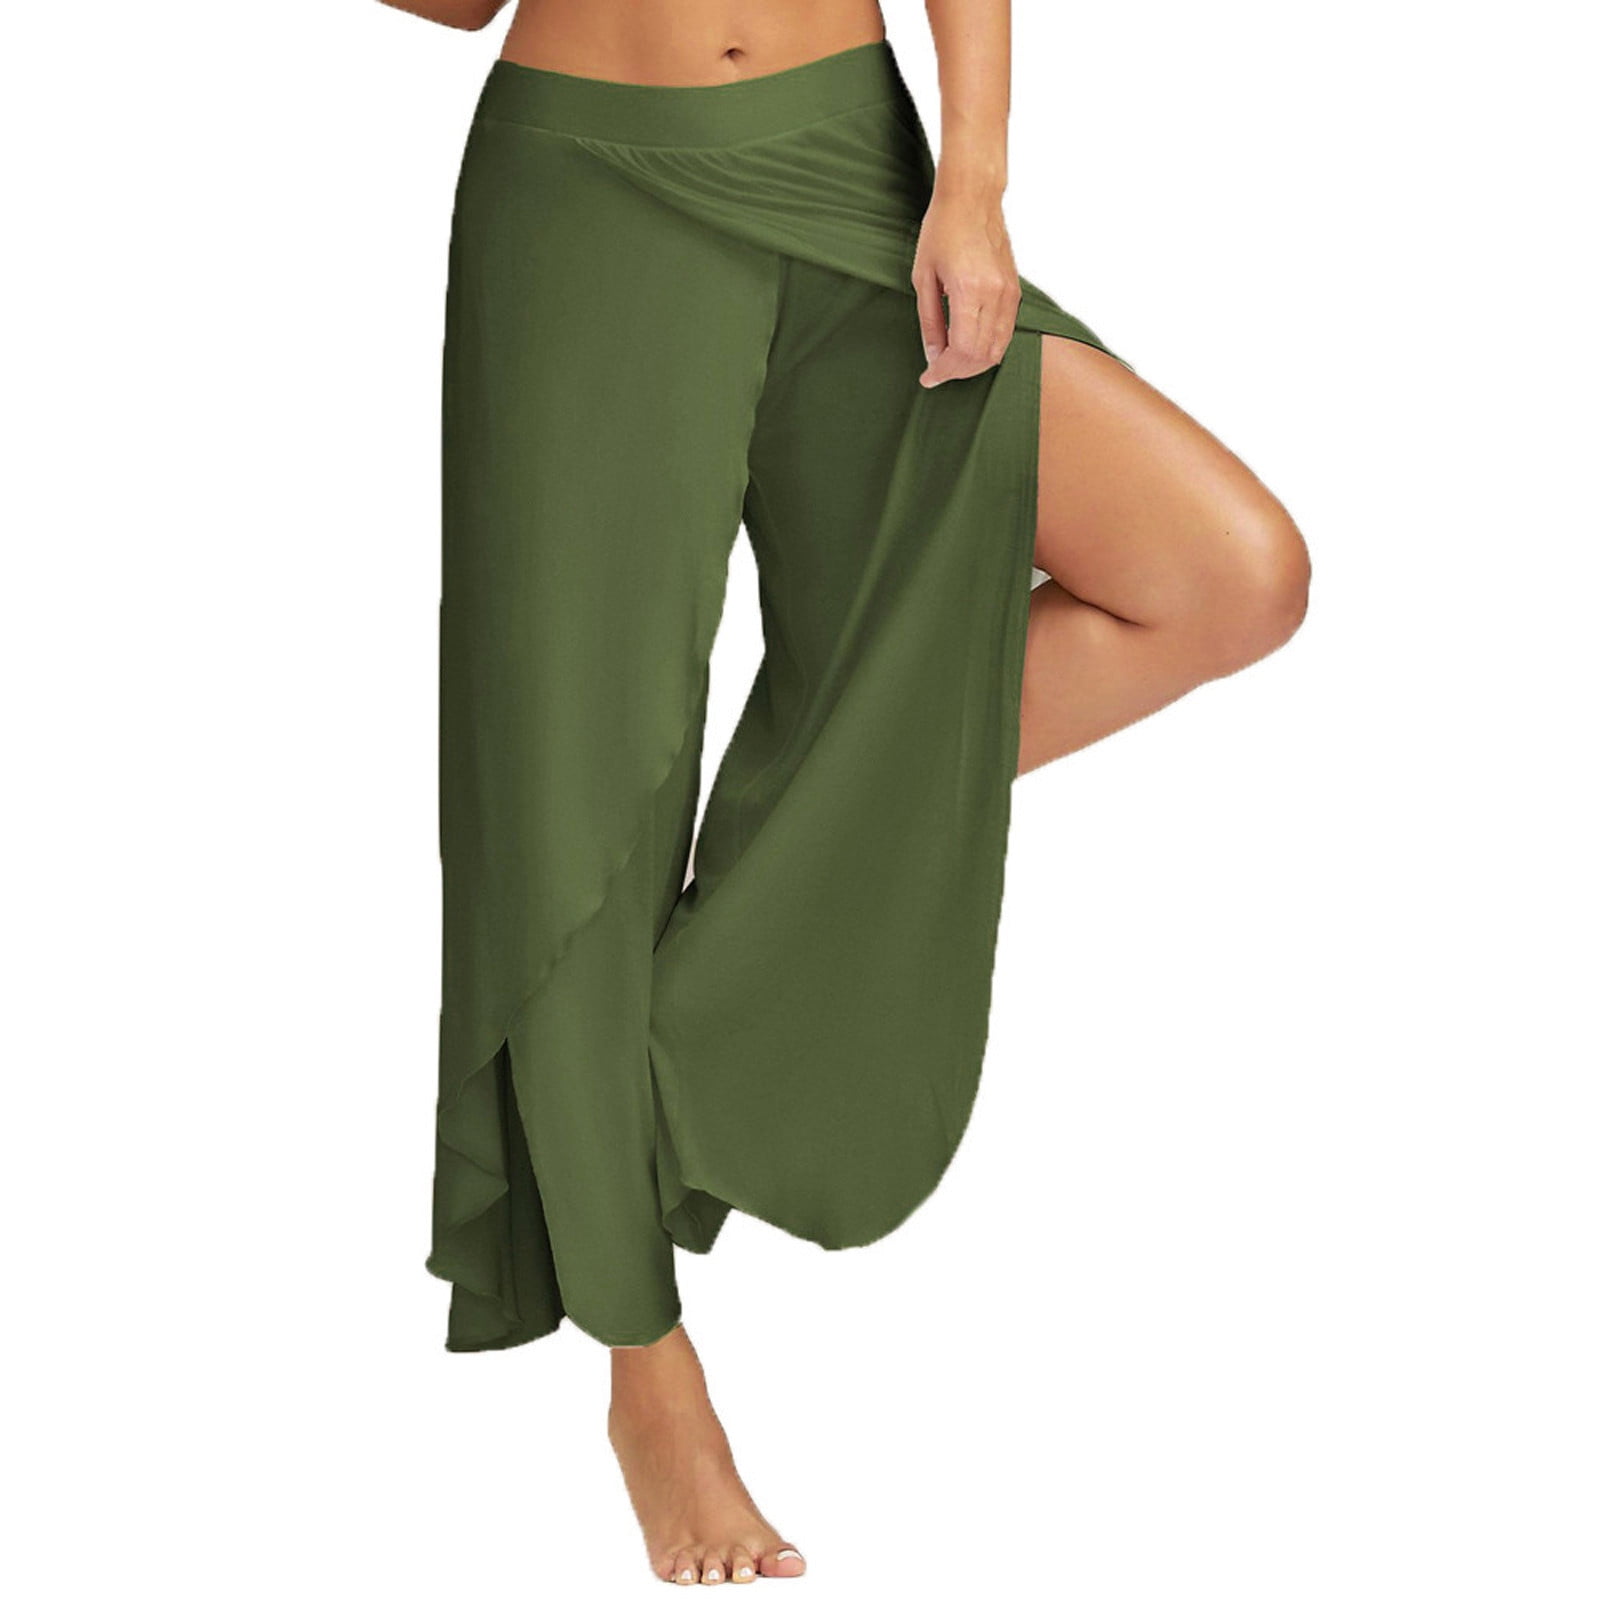 Green Linen Pant Wrap pants beach Harem Trousers Yoga Palazzo pant